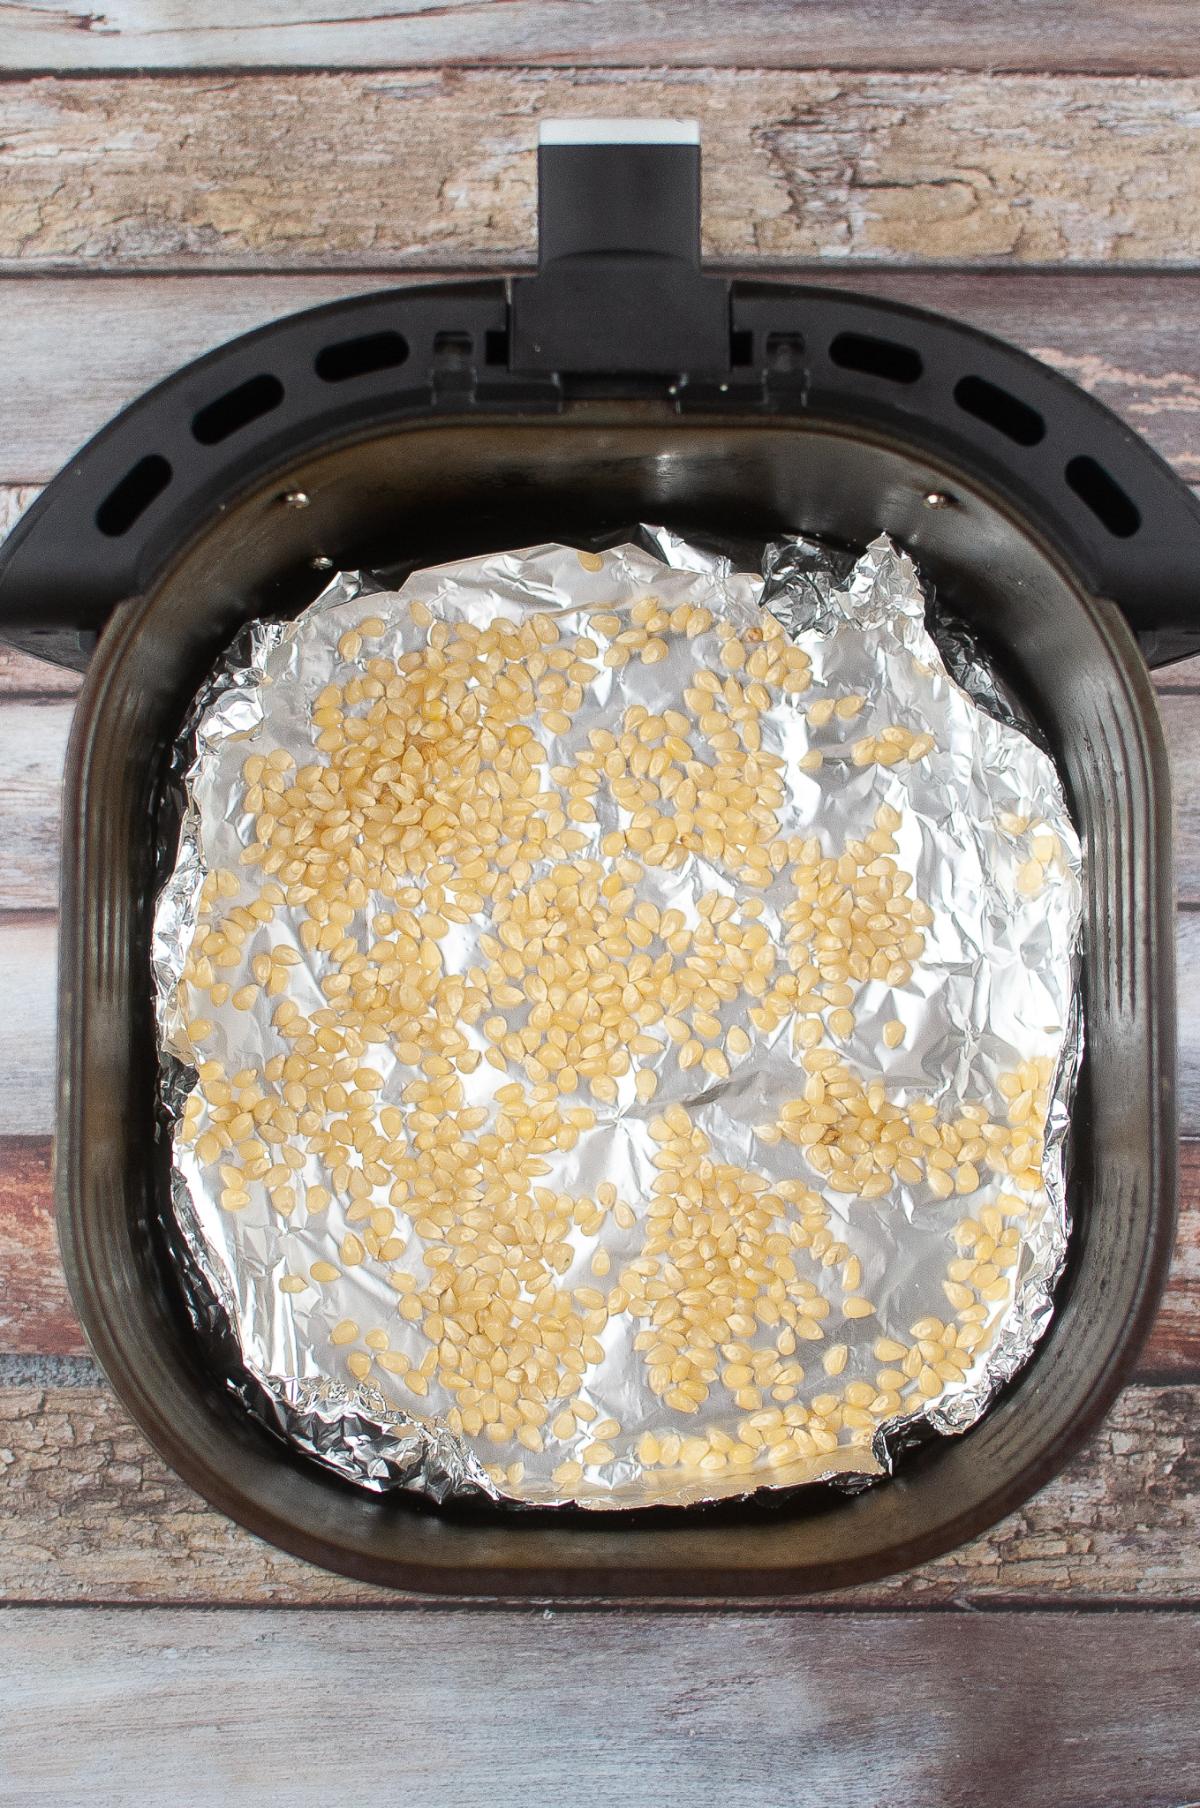 Popcorn kernels arranged on aluminum foil in an air fryer.